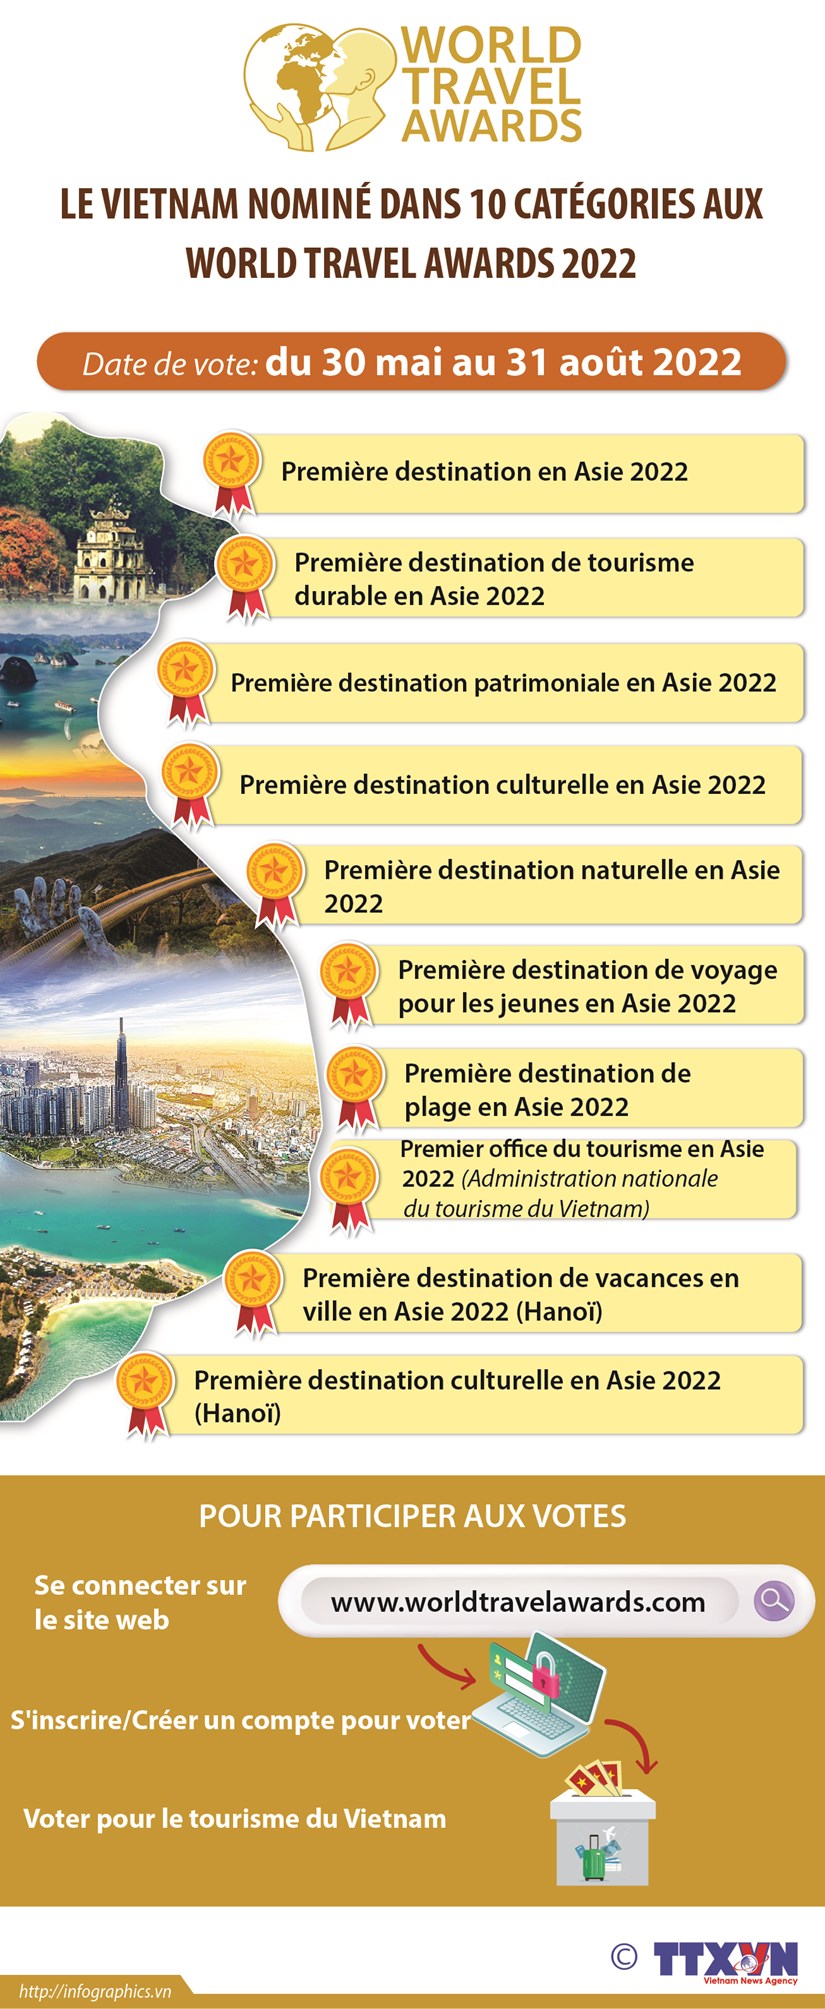 Le Vietnam nomme dans 10 categories aux World Travel Awards 2022 hinh anh 1